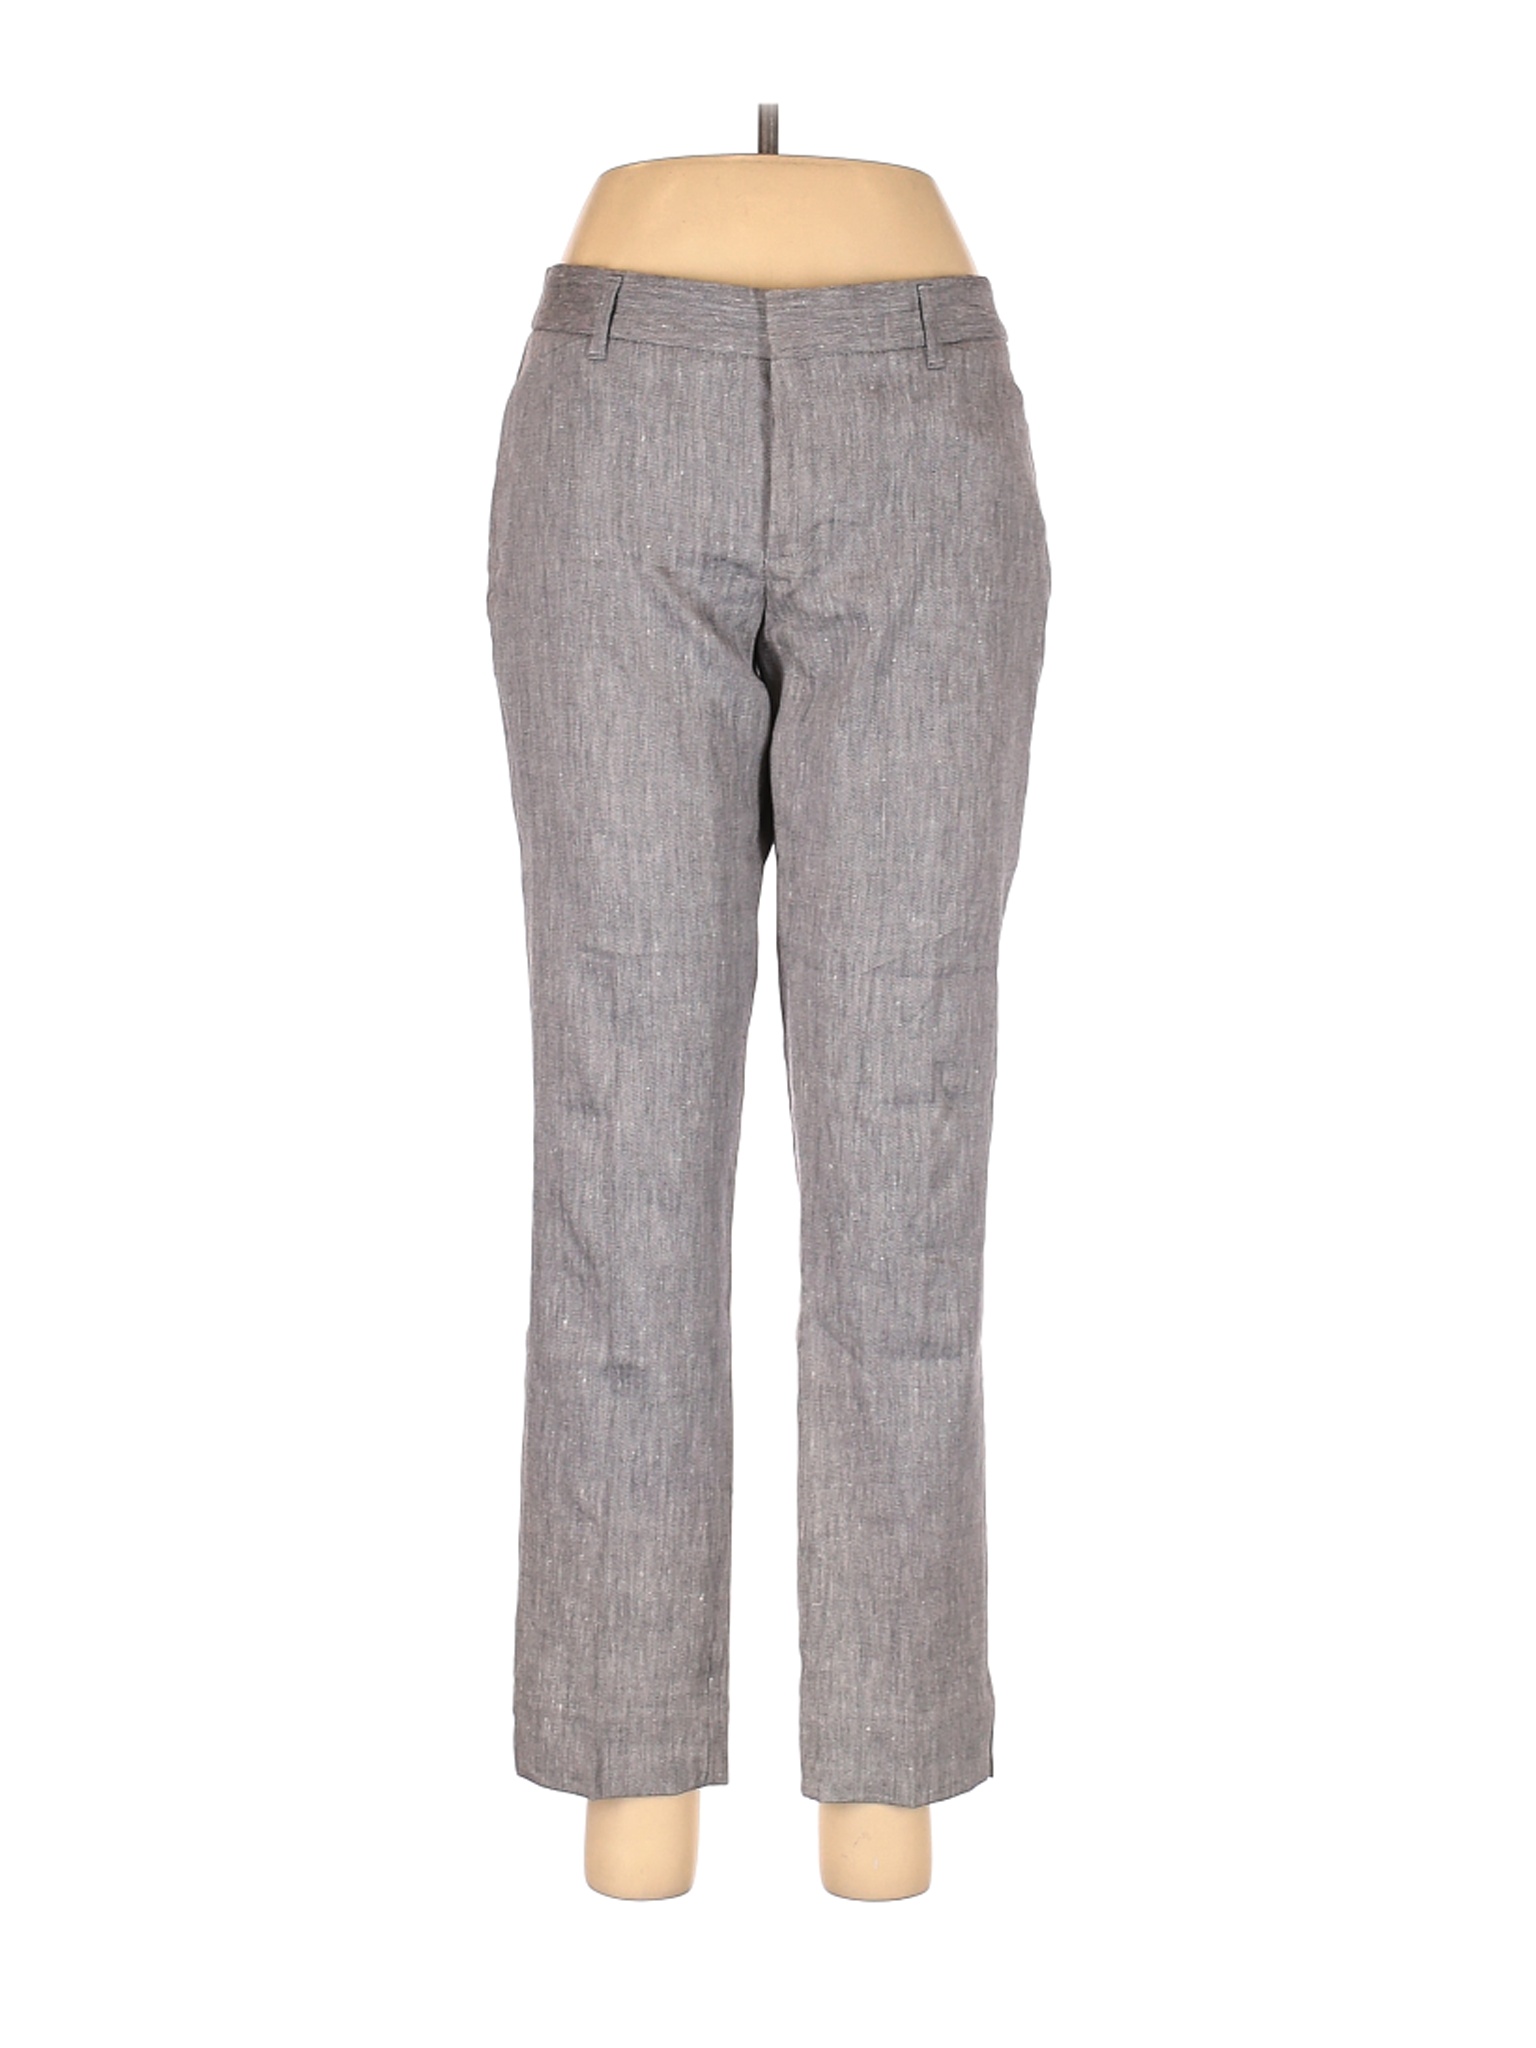 Gap Women Gray Linen Pants 6 | eBay